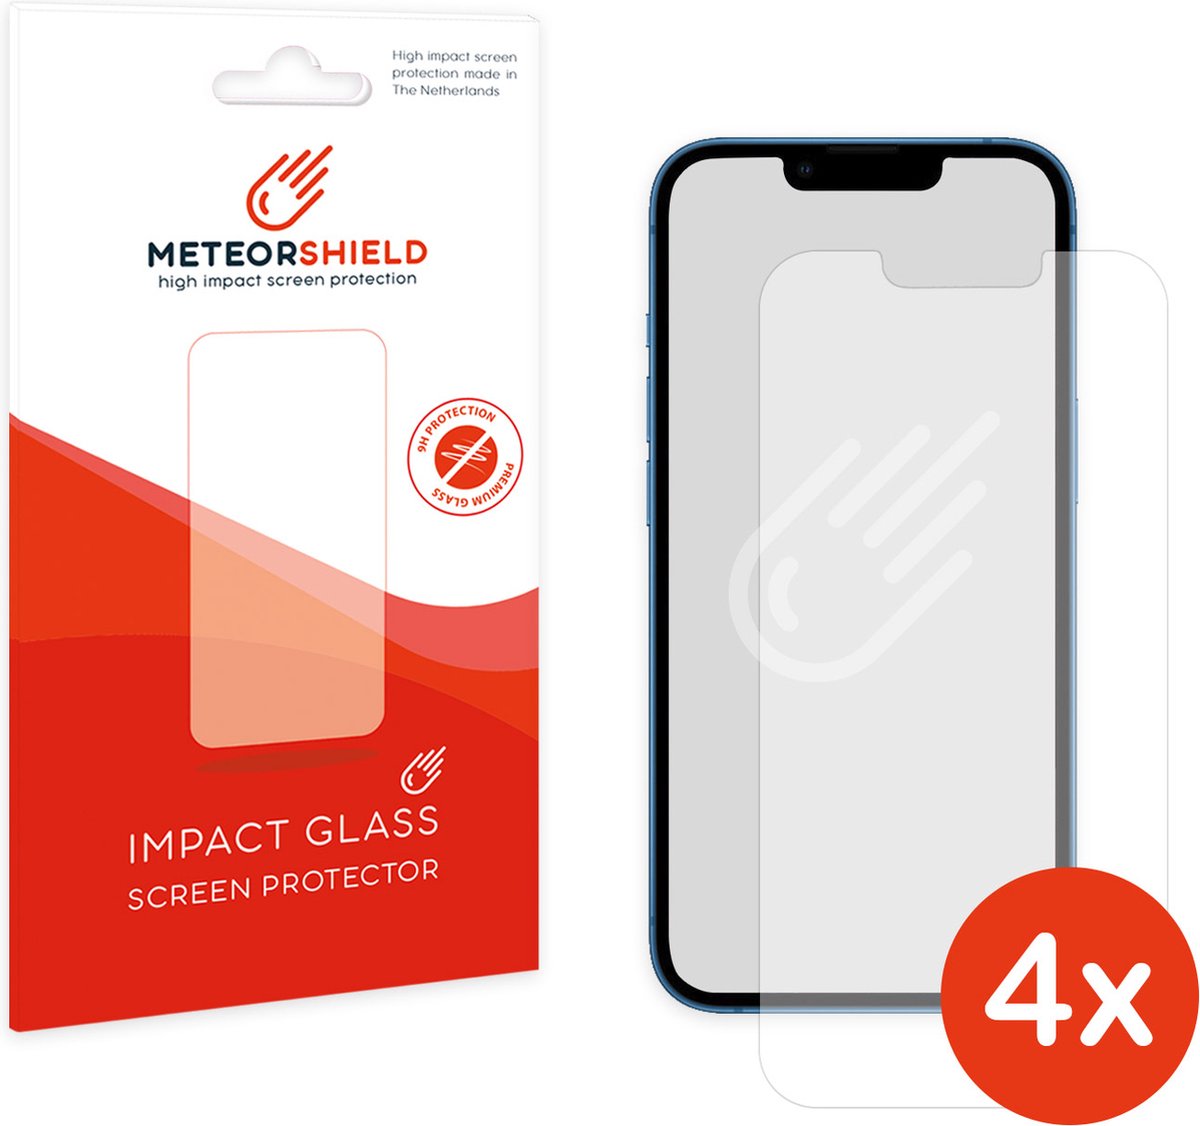 4 stuks: Meteorshield iPhone 13 screenprotector - Ultra clear impact glass